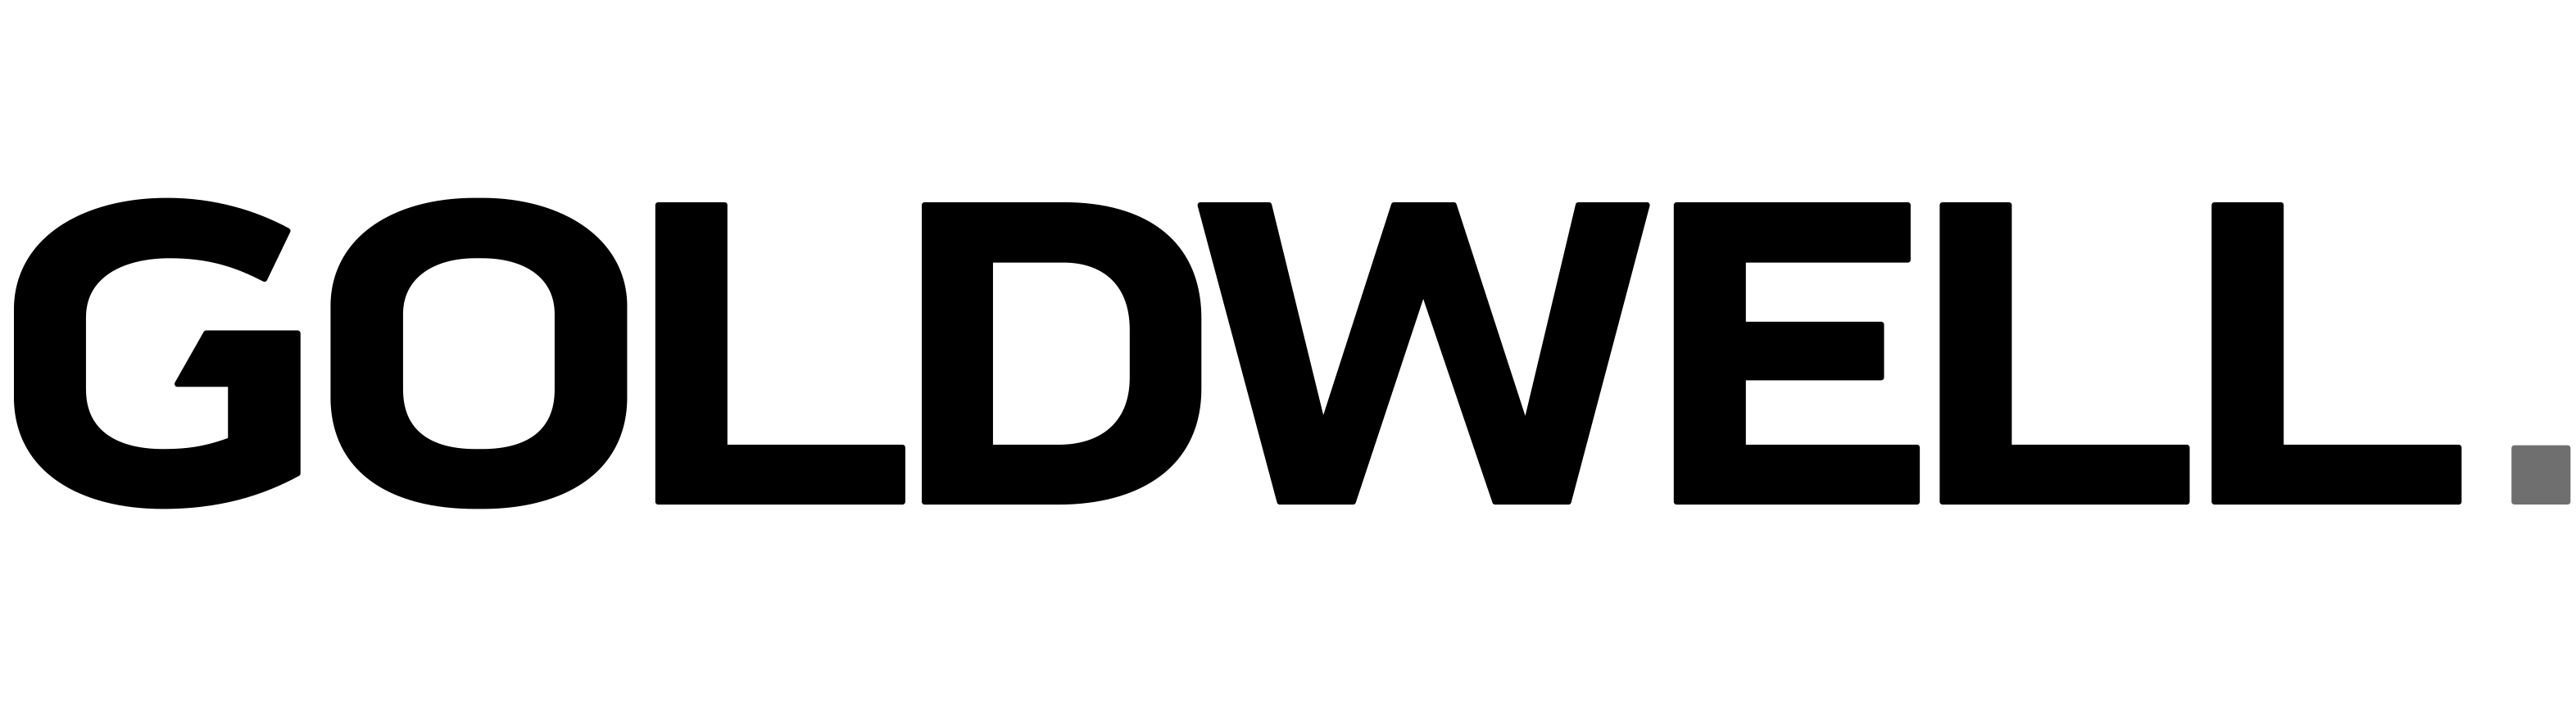 Goldwell logo